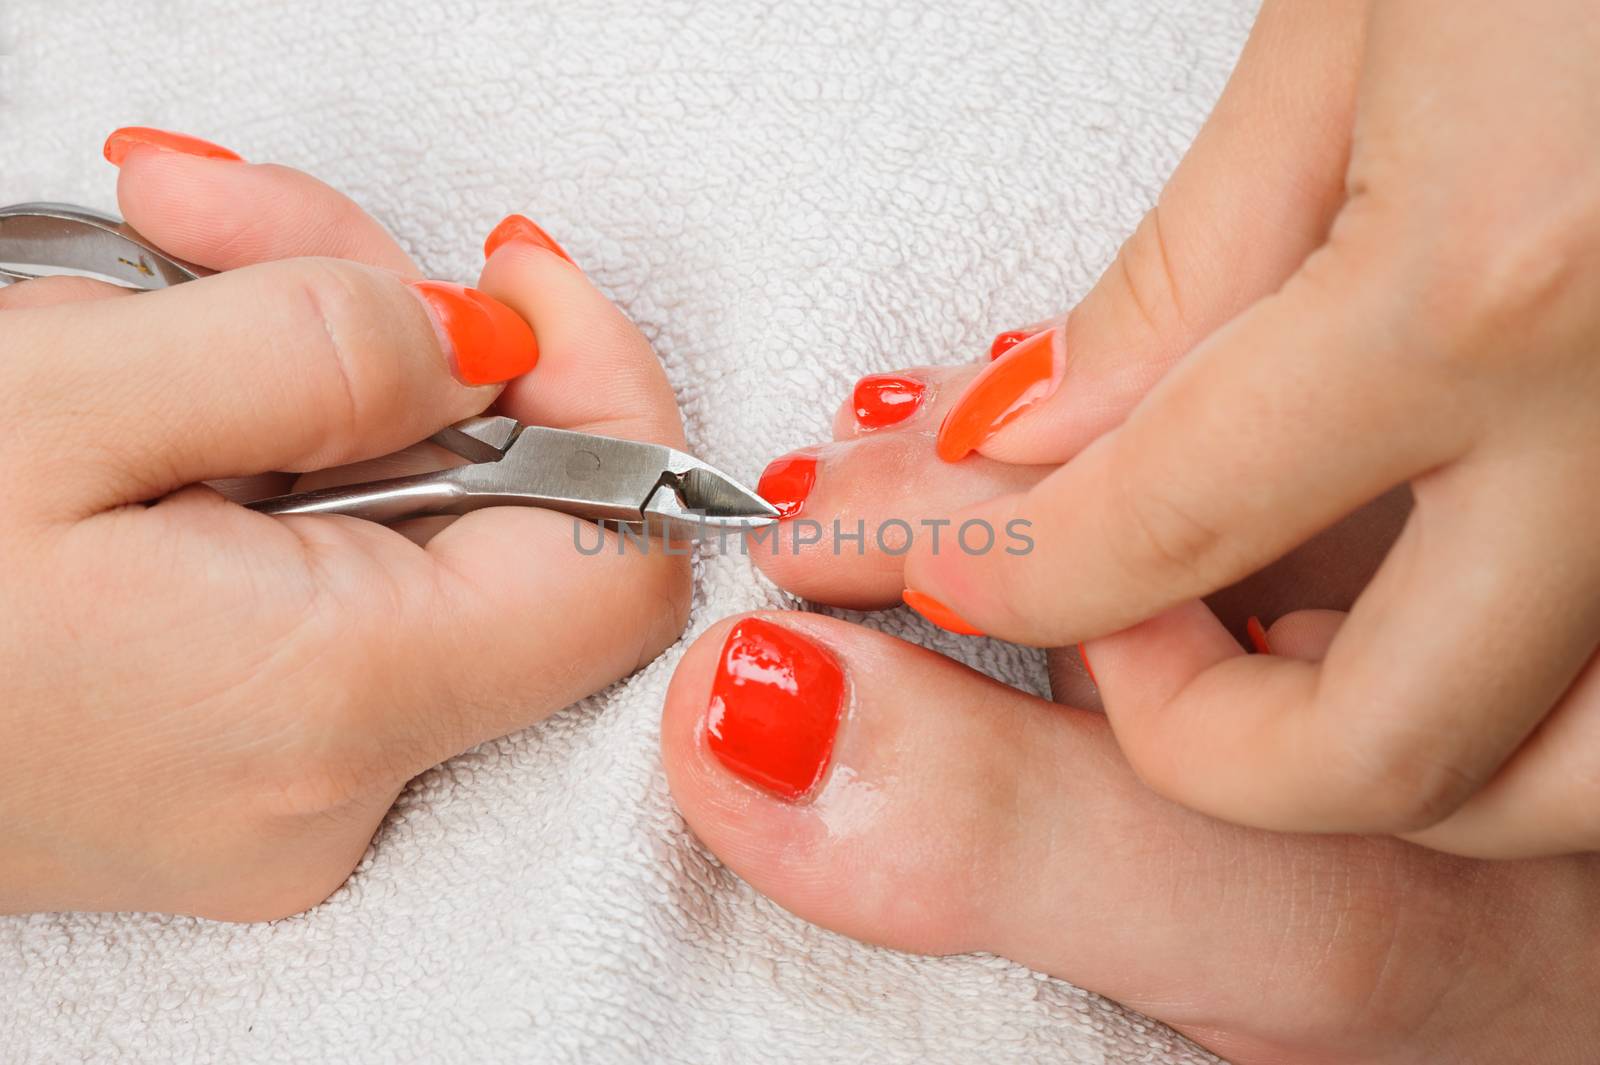 cutting cuticlle on toe with scissors, pedicure process closeup